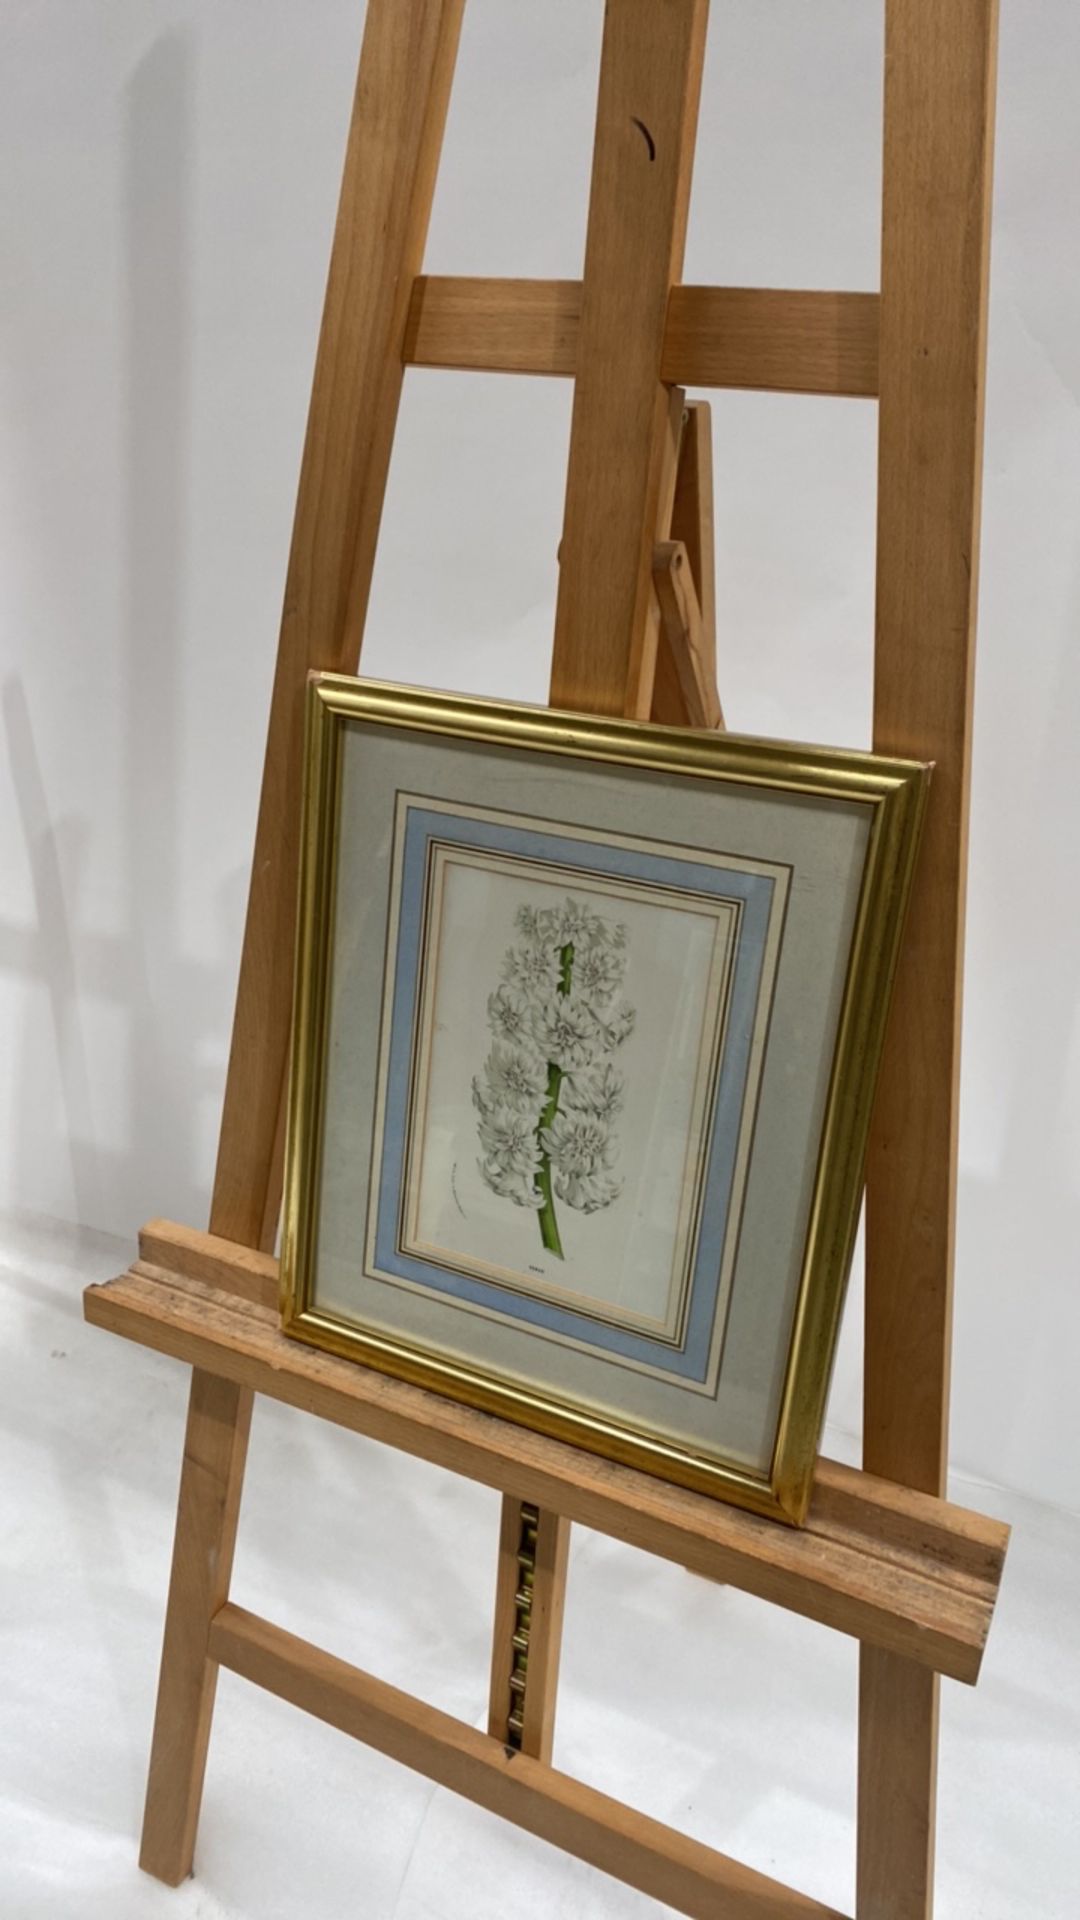 Artwork -Venus Flowers Print From Claridge's Hotel